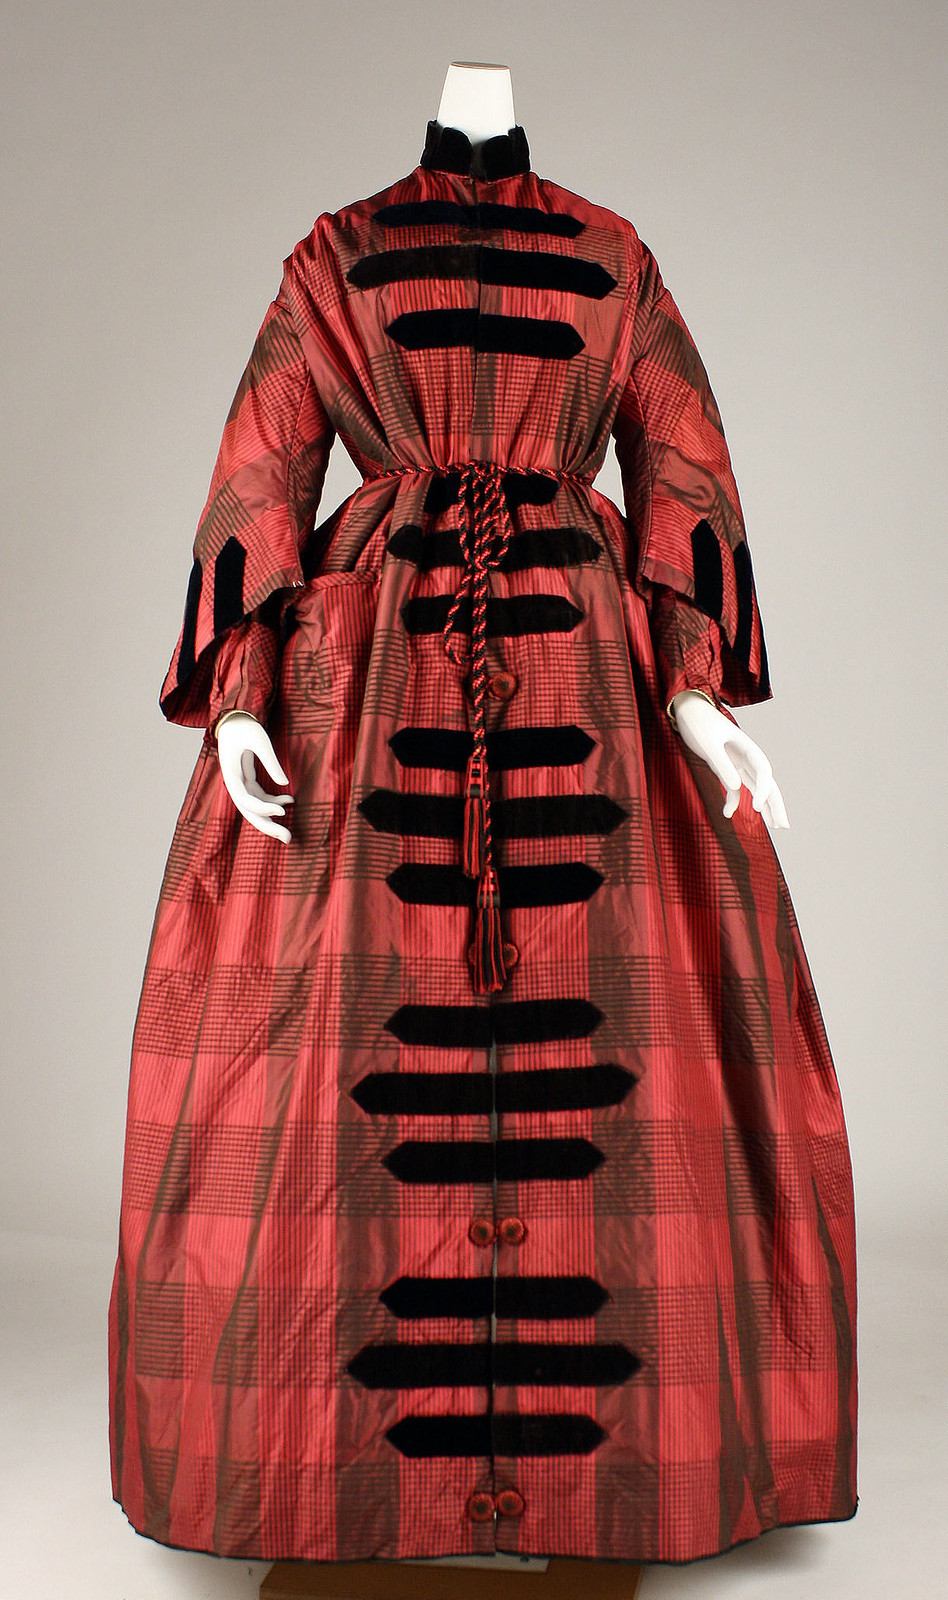 Dressing gown, c.1855, American, metmuseum